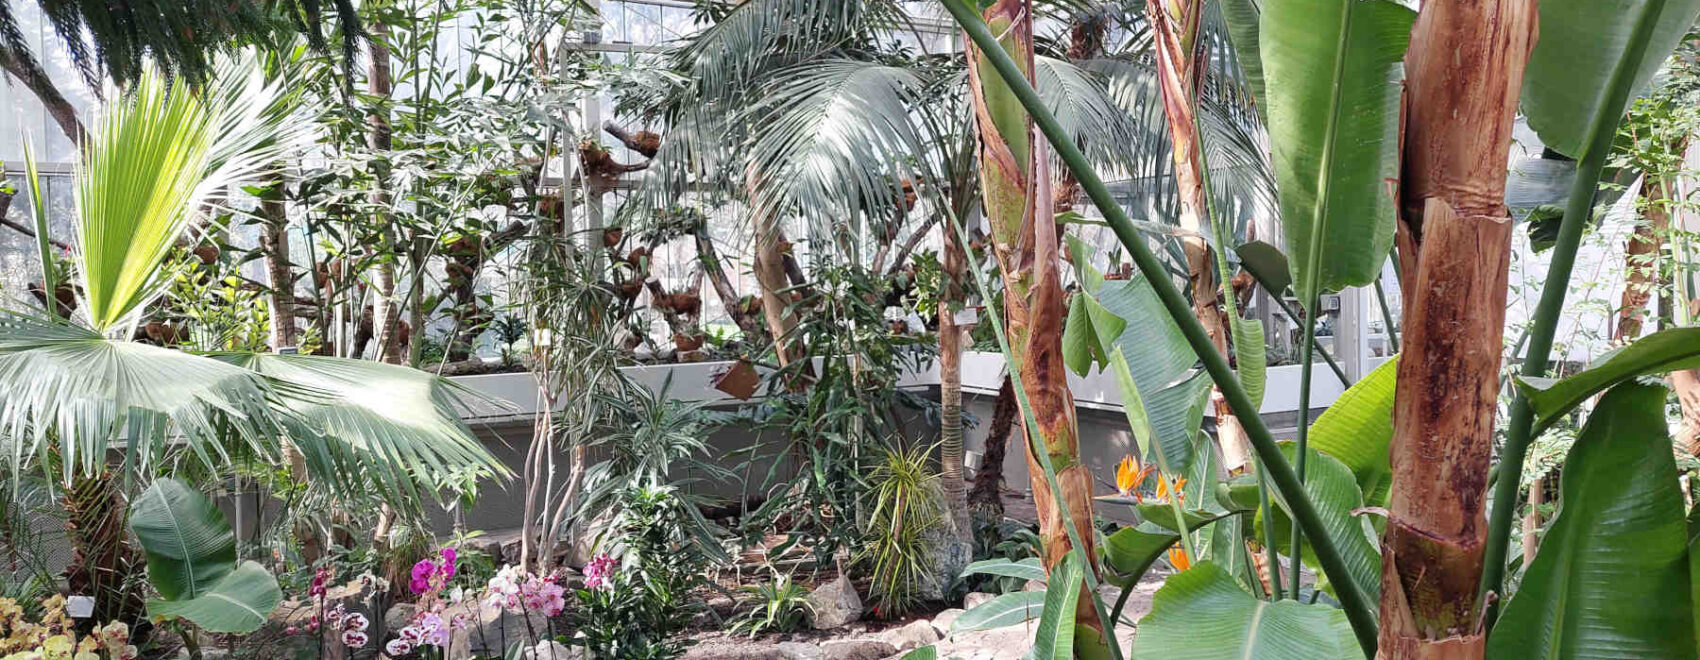 Jevremovac Botanical Garden, greenhouse